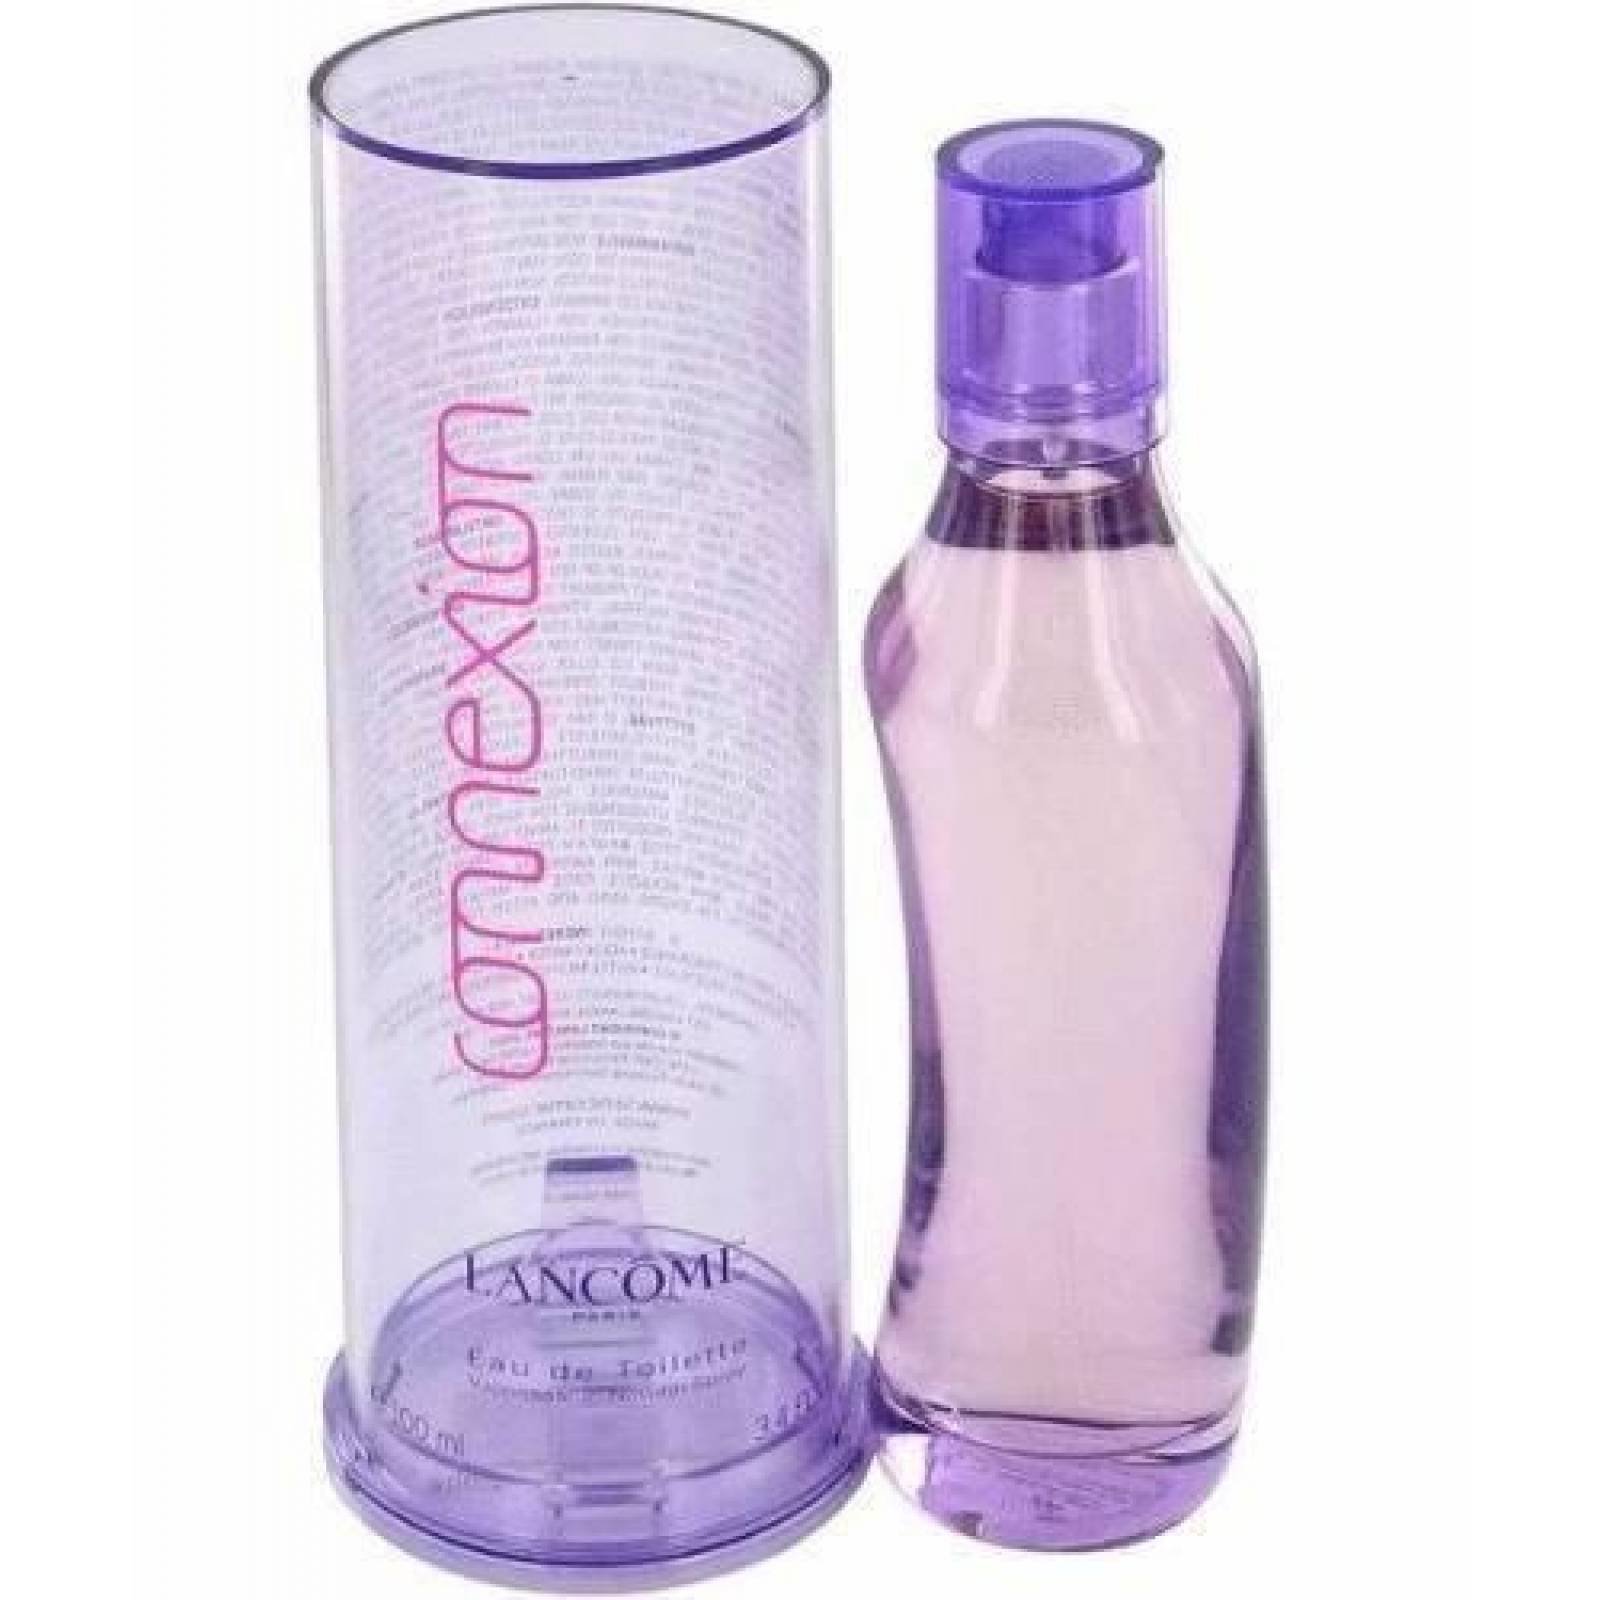 Connexion Dama Lancome 100 Ml Edt - Perfume Original